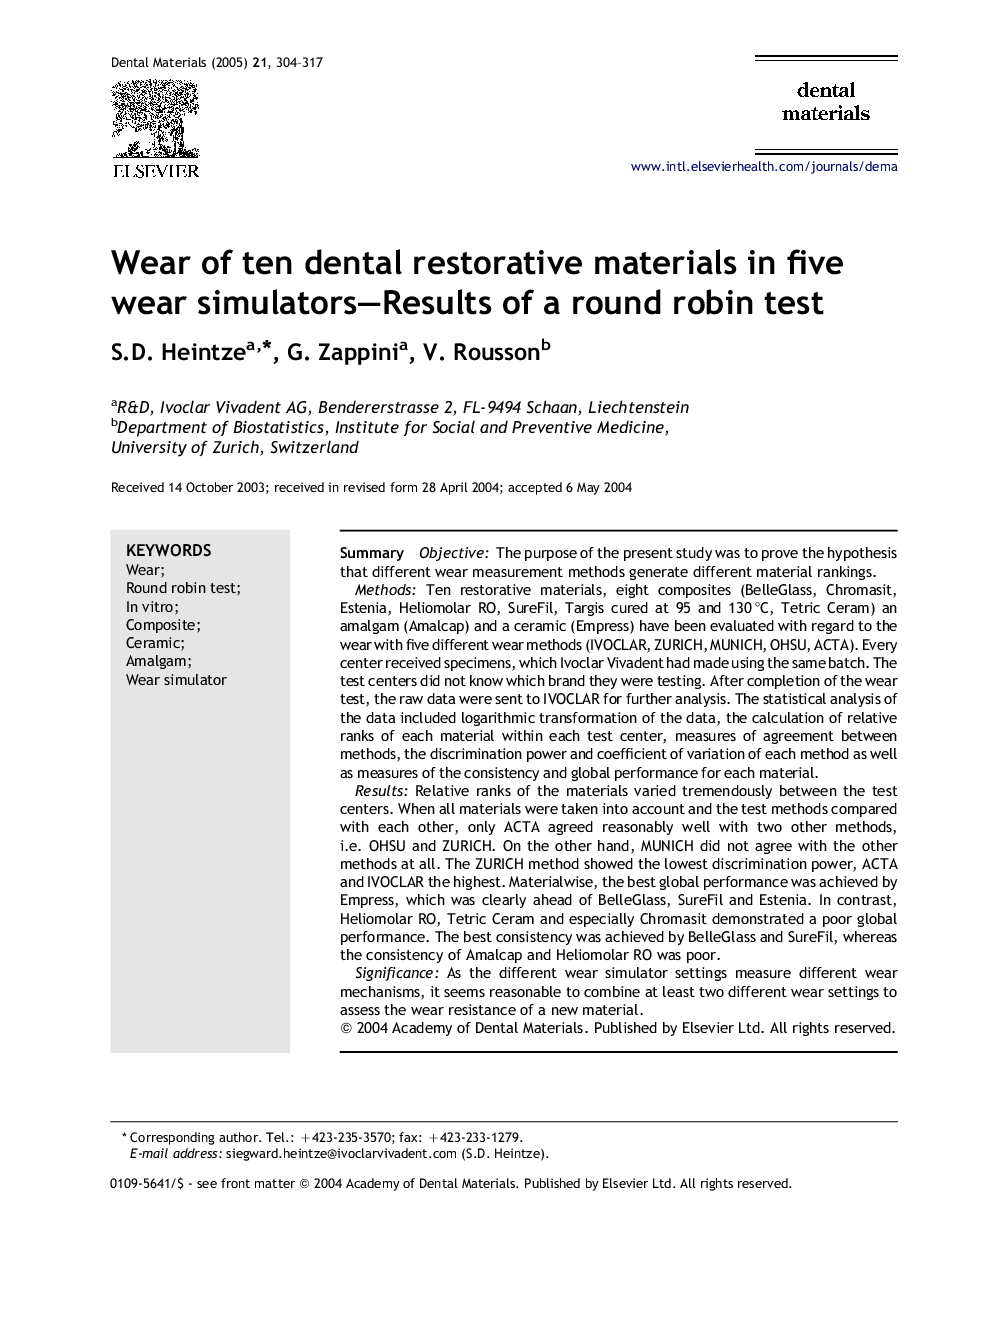 Wear of ten dental restorative materials in five wear simulators-Results of a round robin test